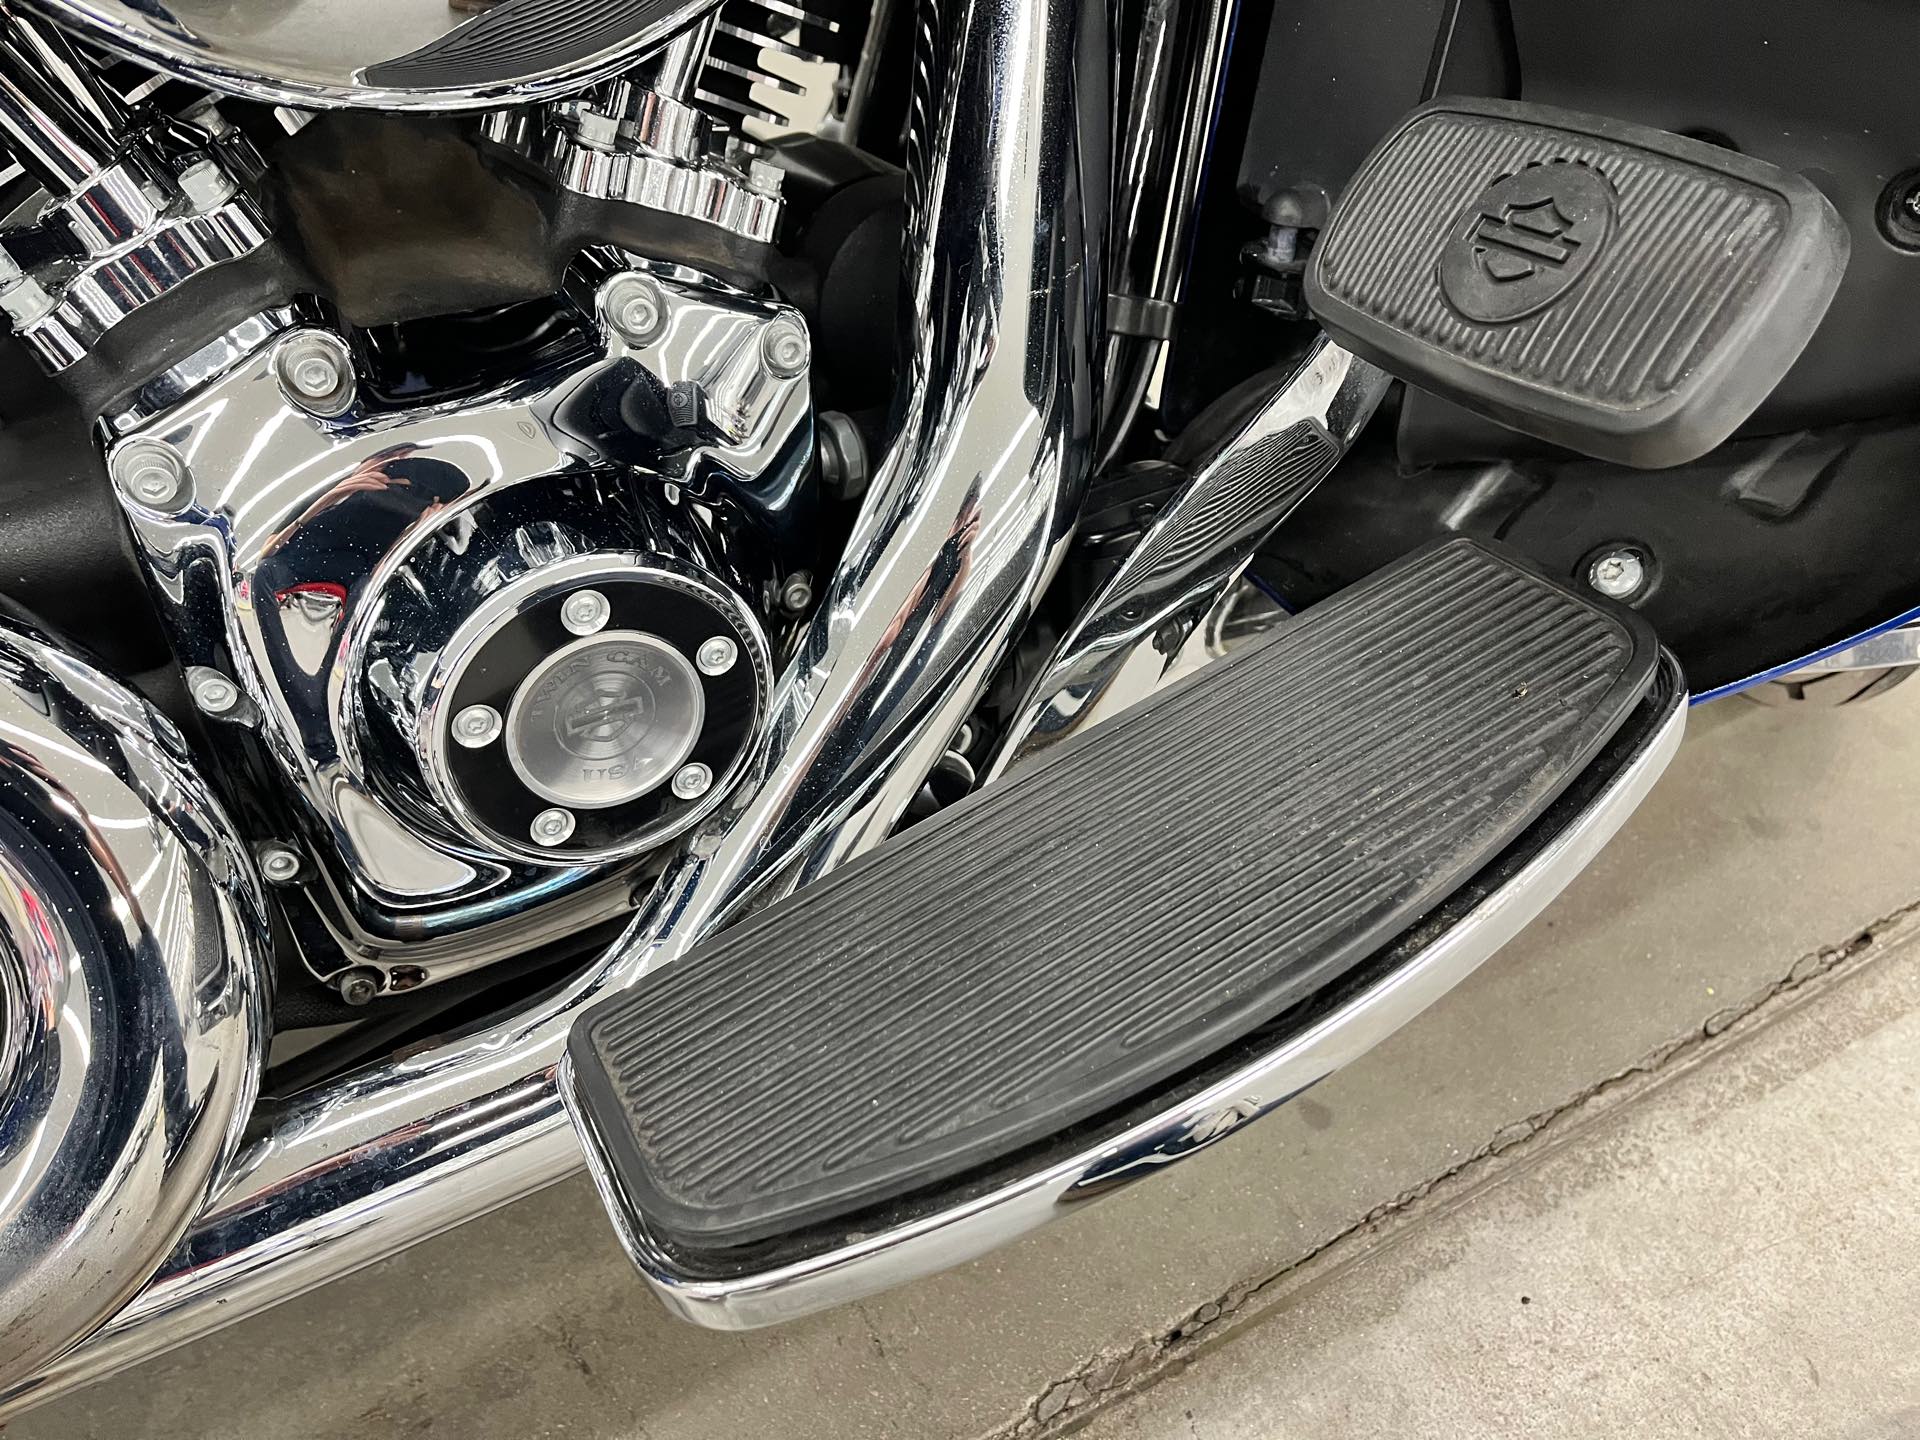 2015 Harley-Davidson Electra Glide Ultra Limited at Aces Motorcycles - Denver